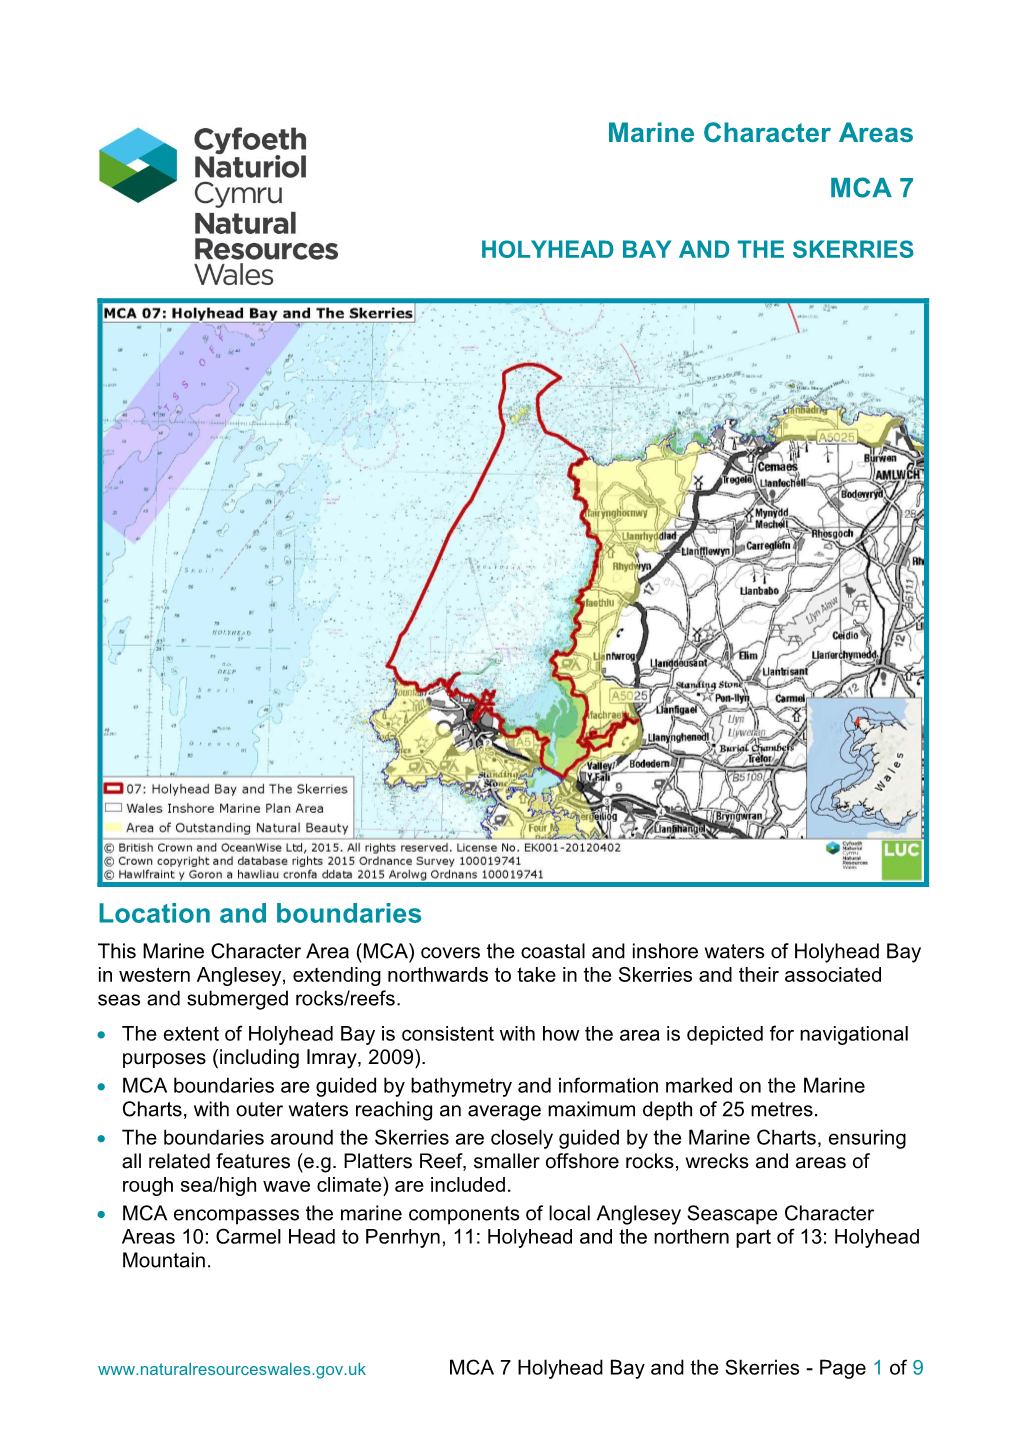 Marine Character Areas MCA 7 Location and Boundaries